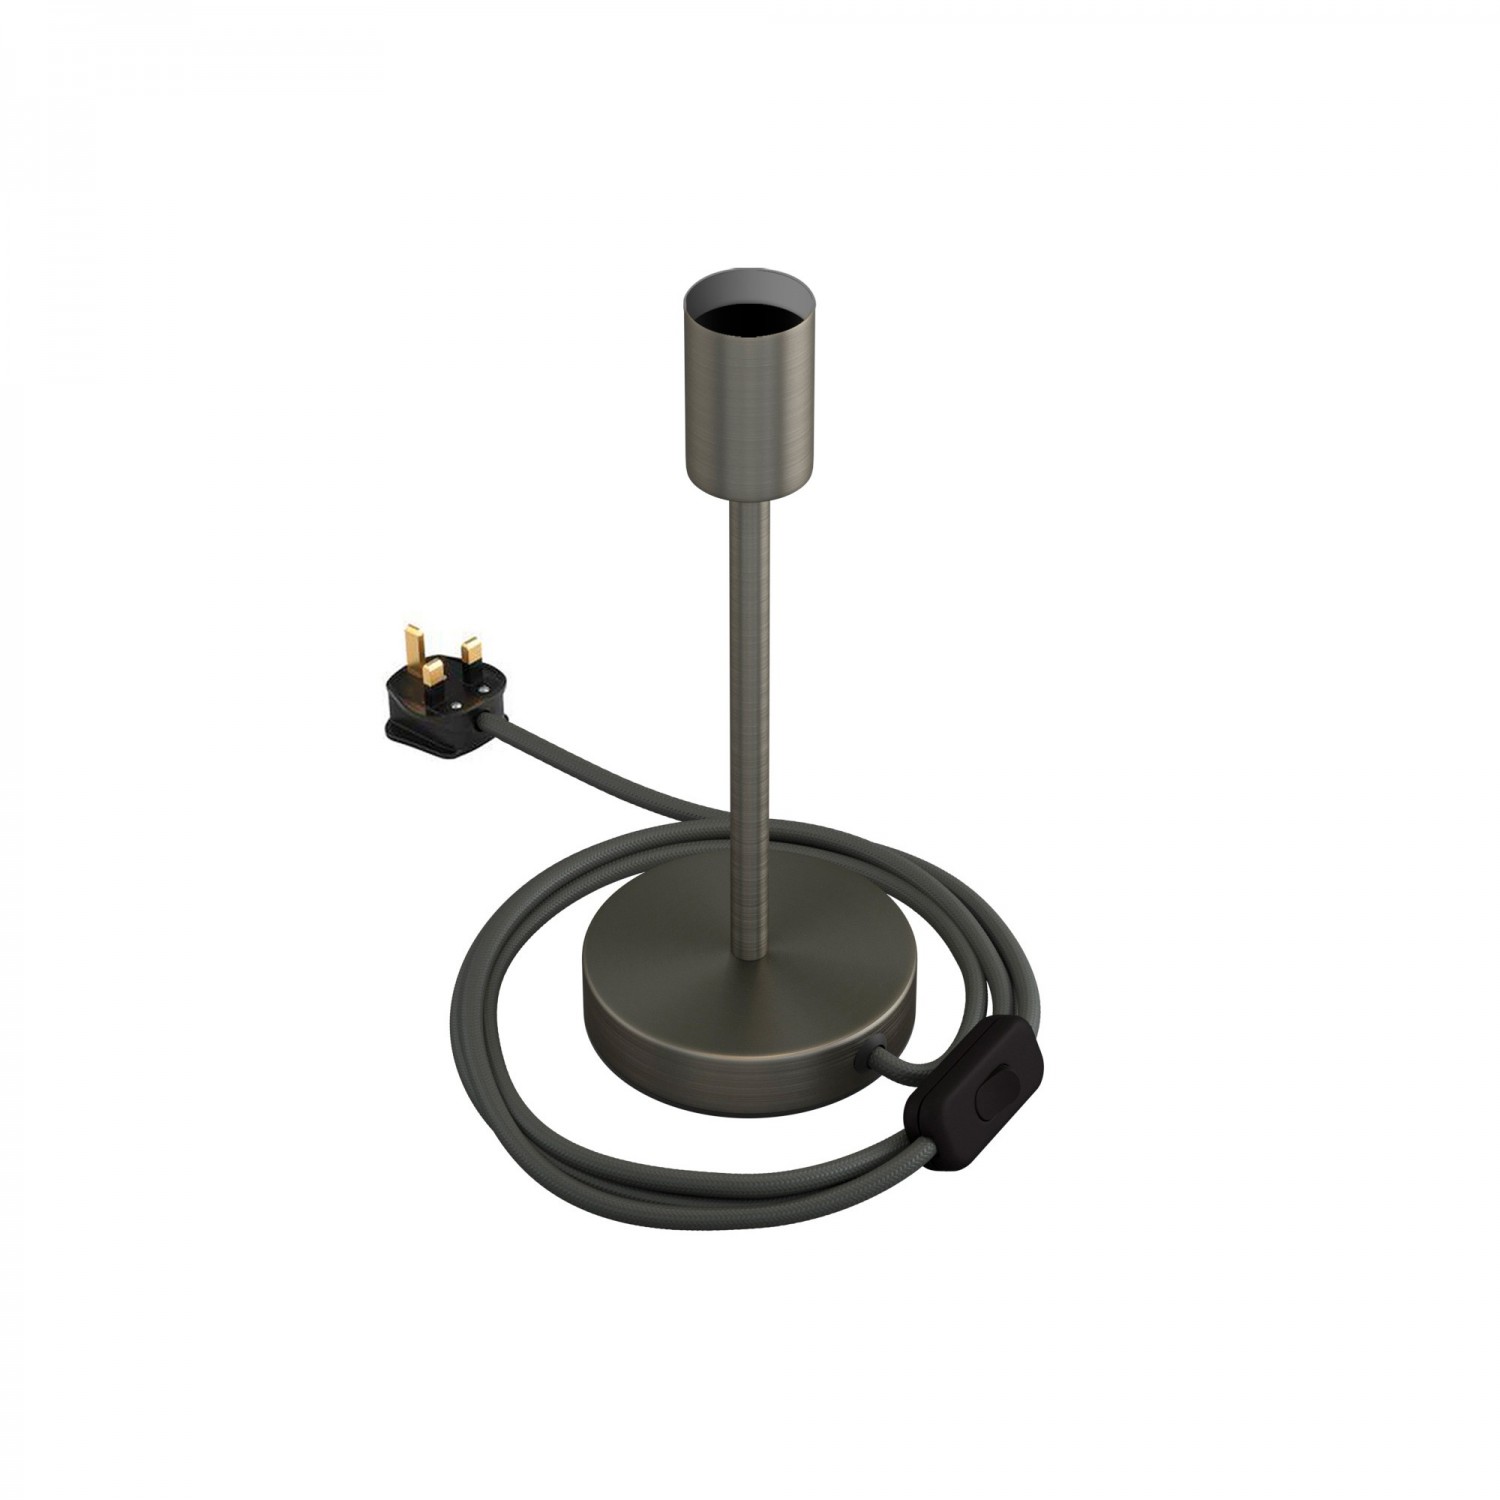 Alzaluce - Metal table lamp with UK plug